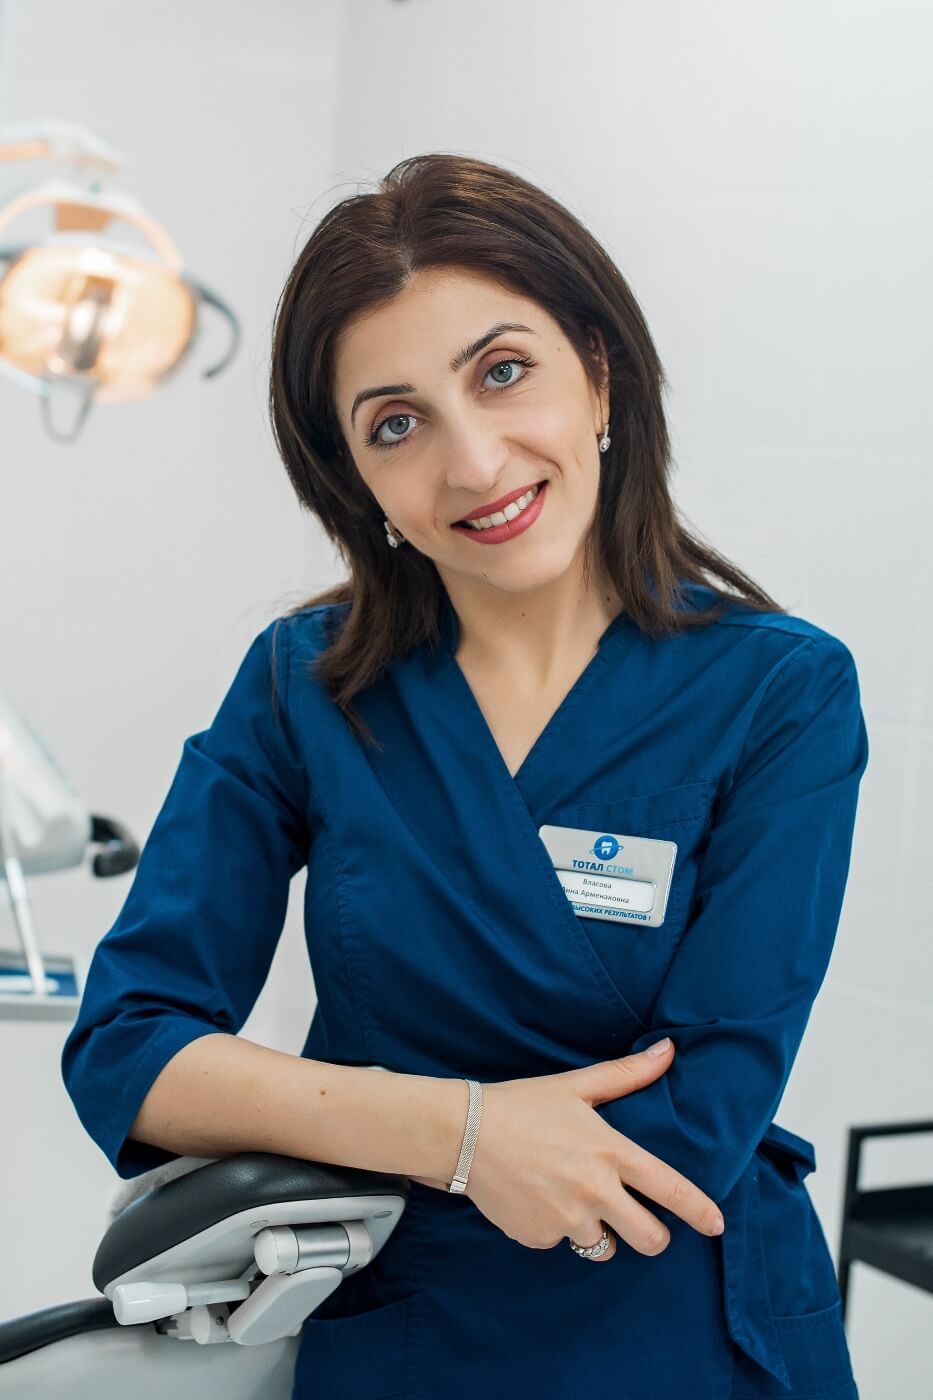 стоматолог-терапевт клиники ТоталСтом